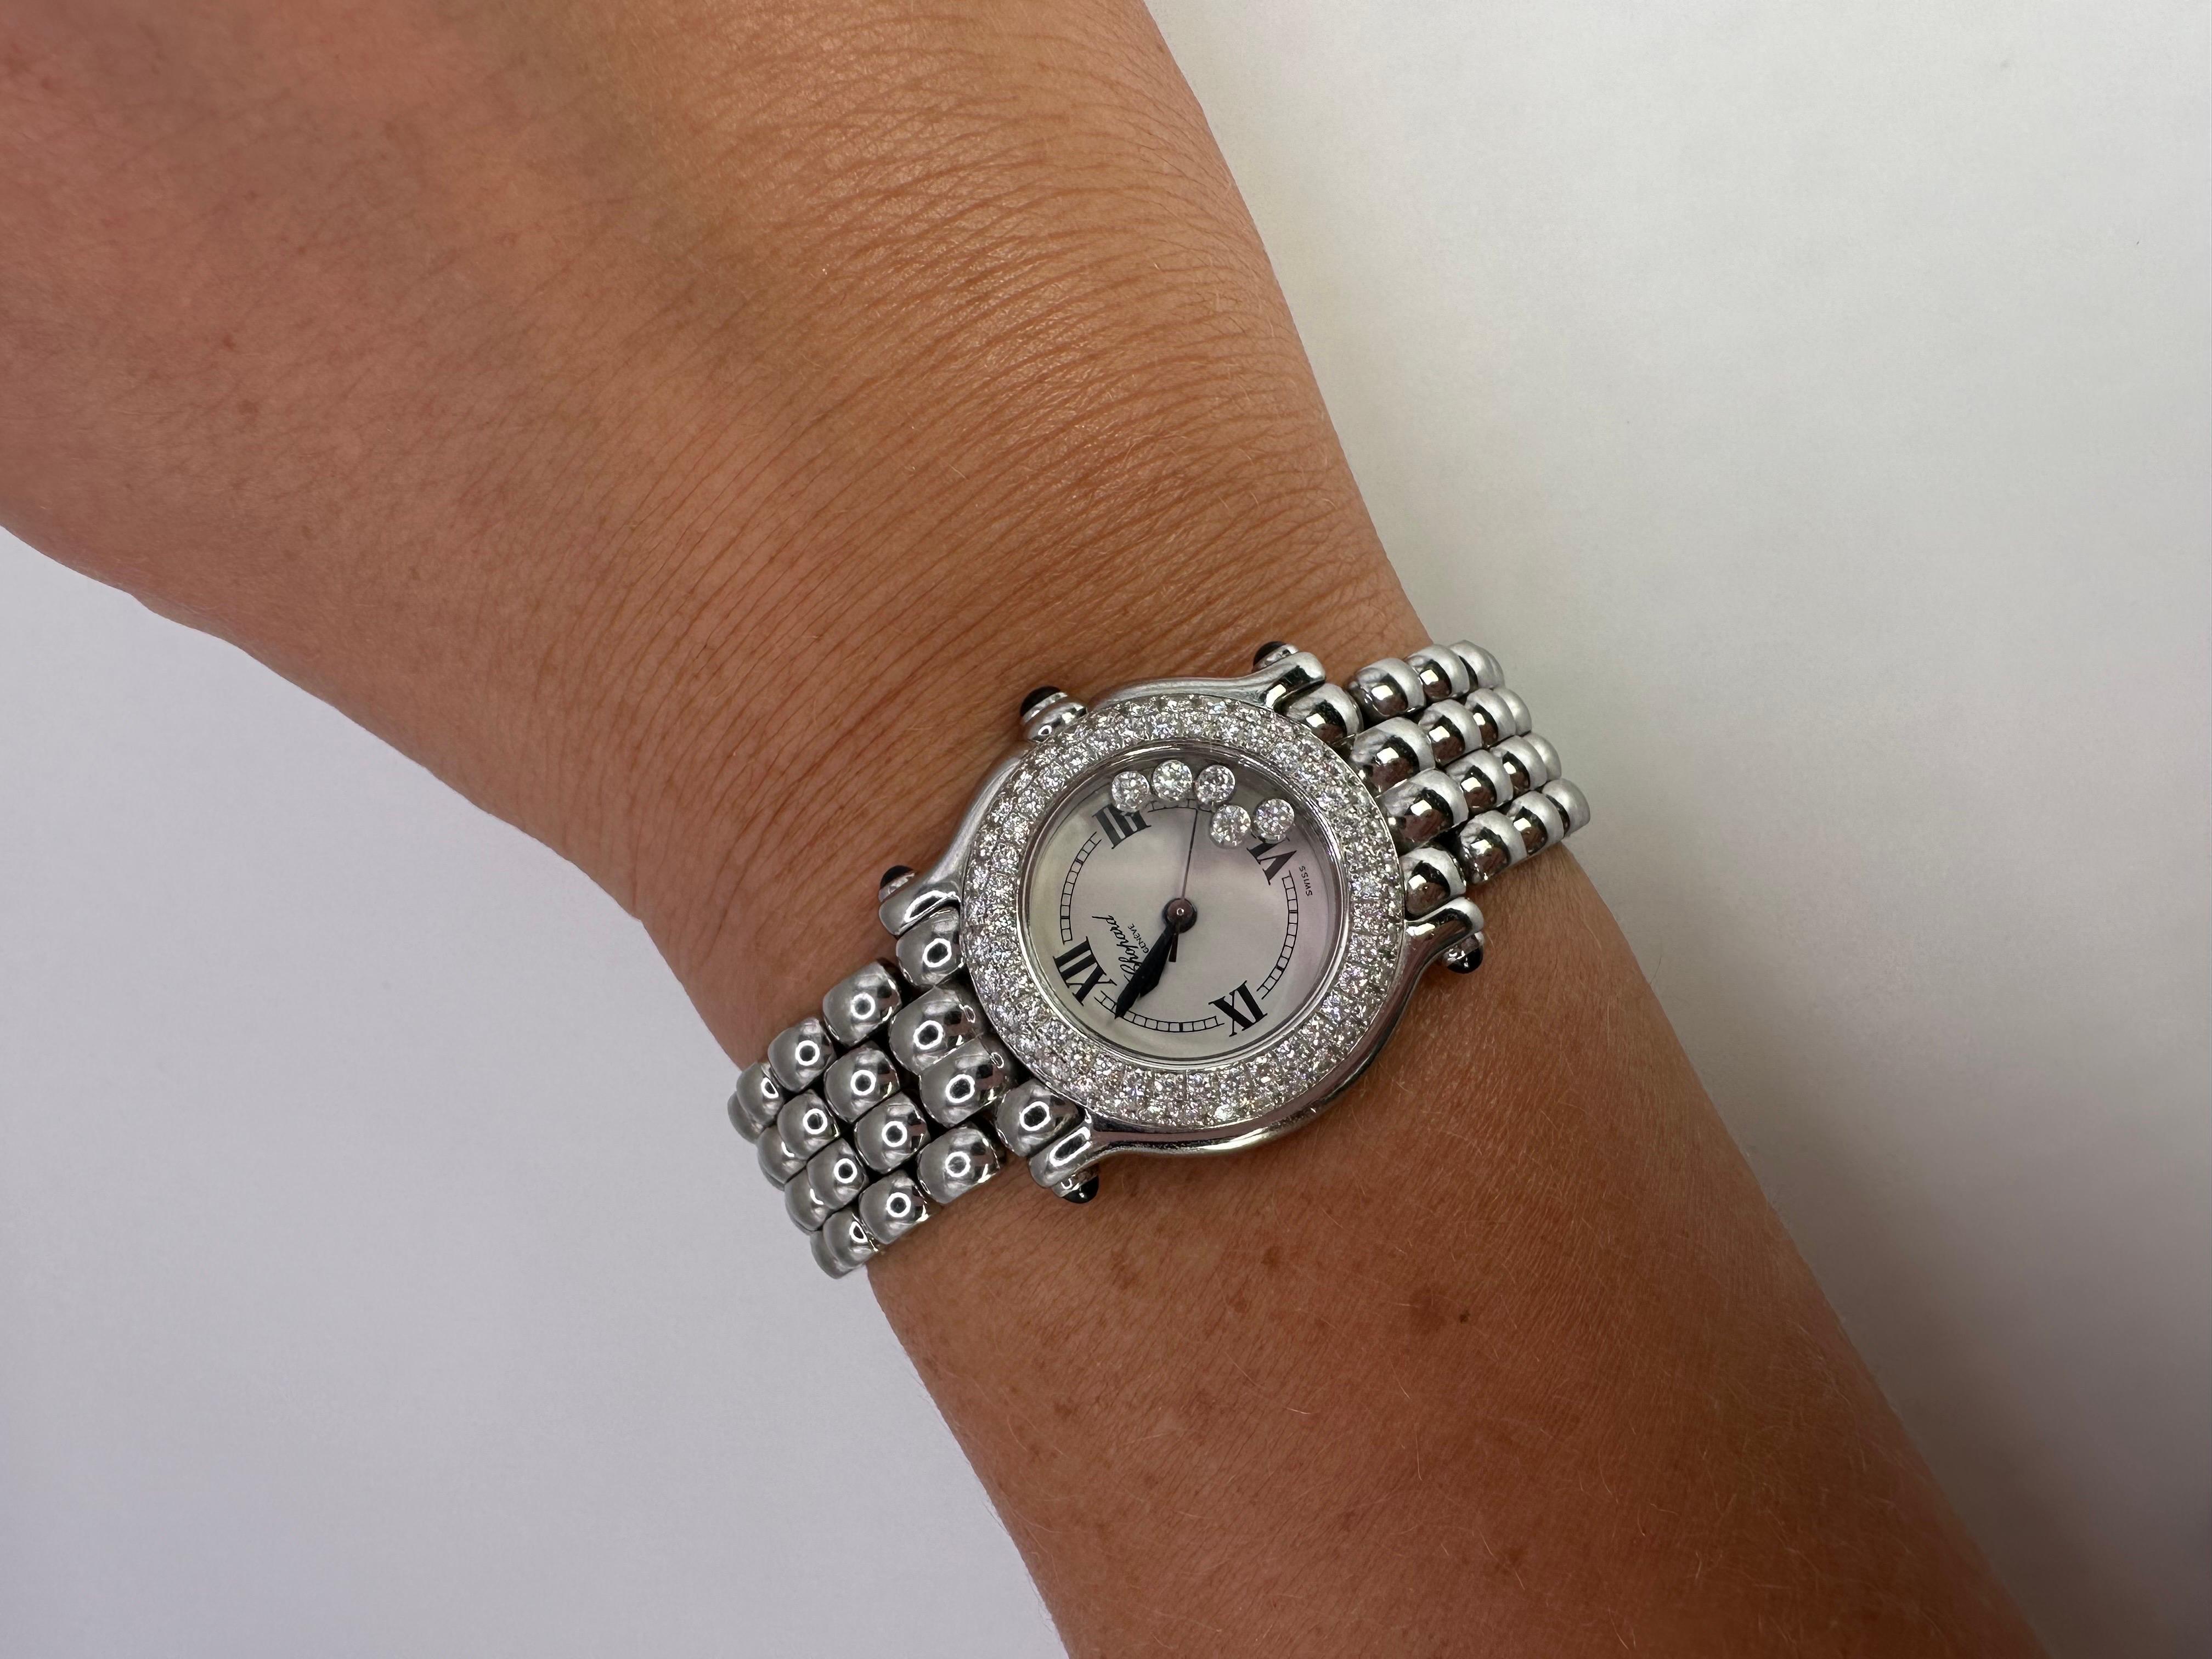 julia roberts chopard watch price